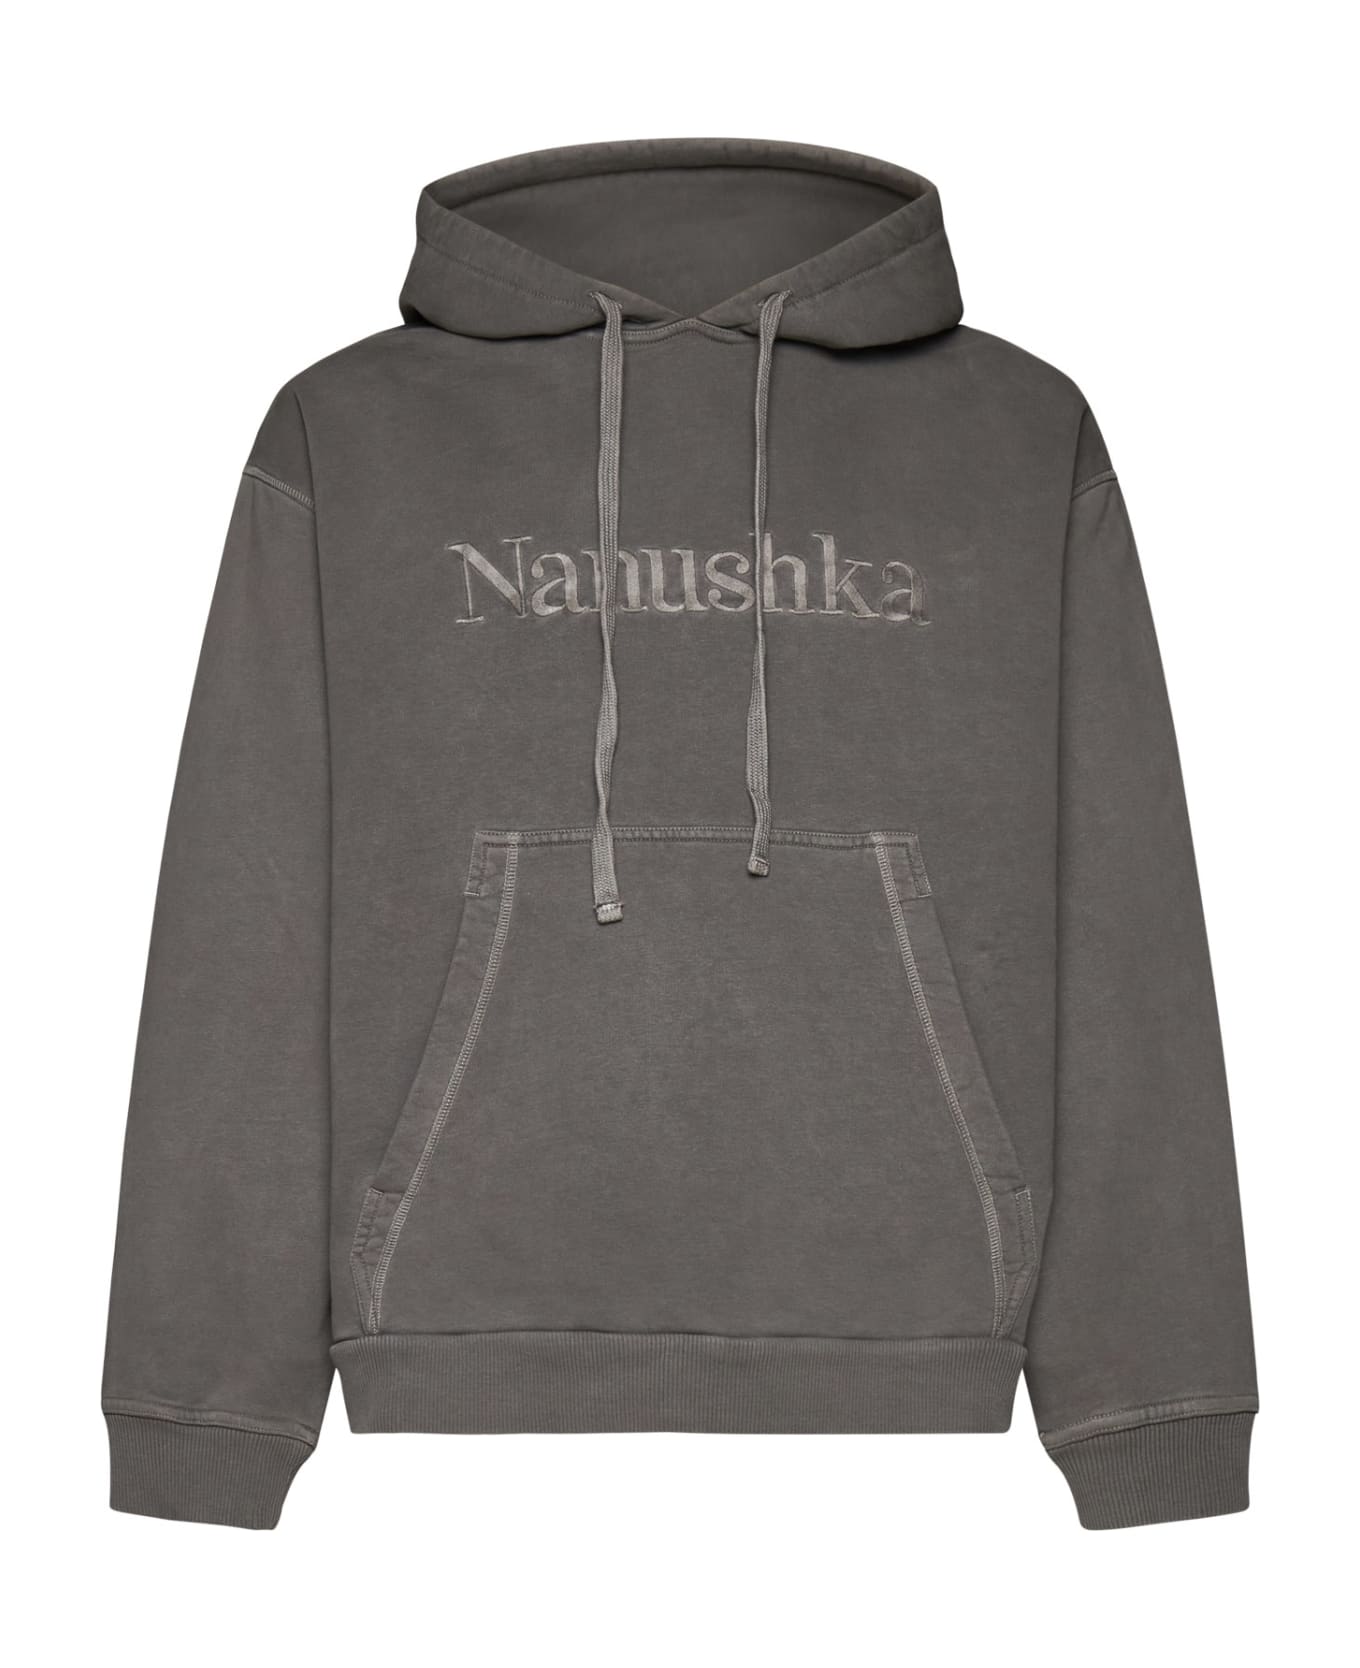 Nanushka Fleece - Asphalt